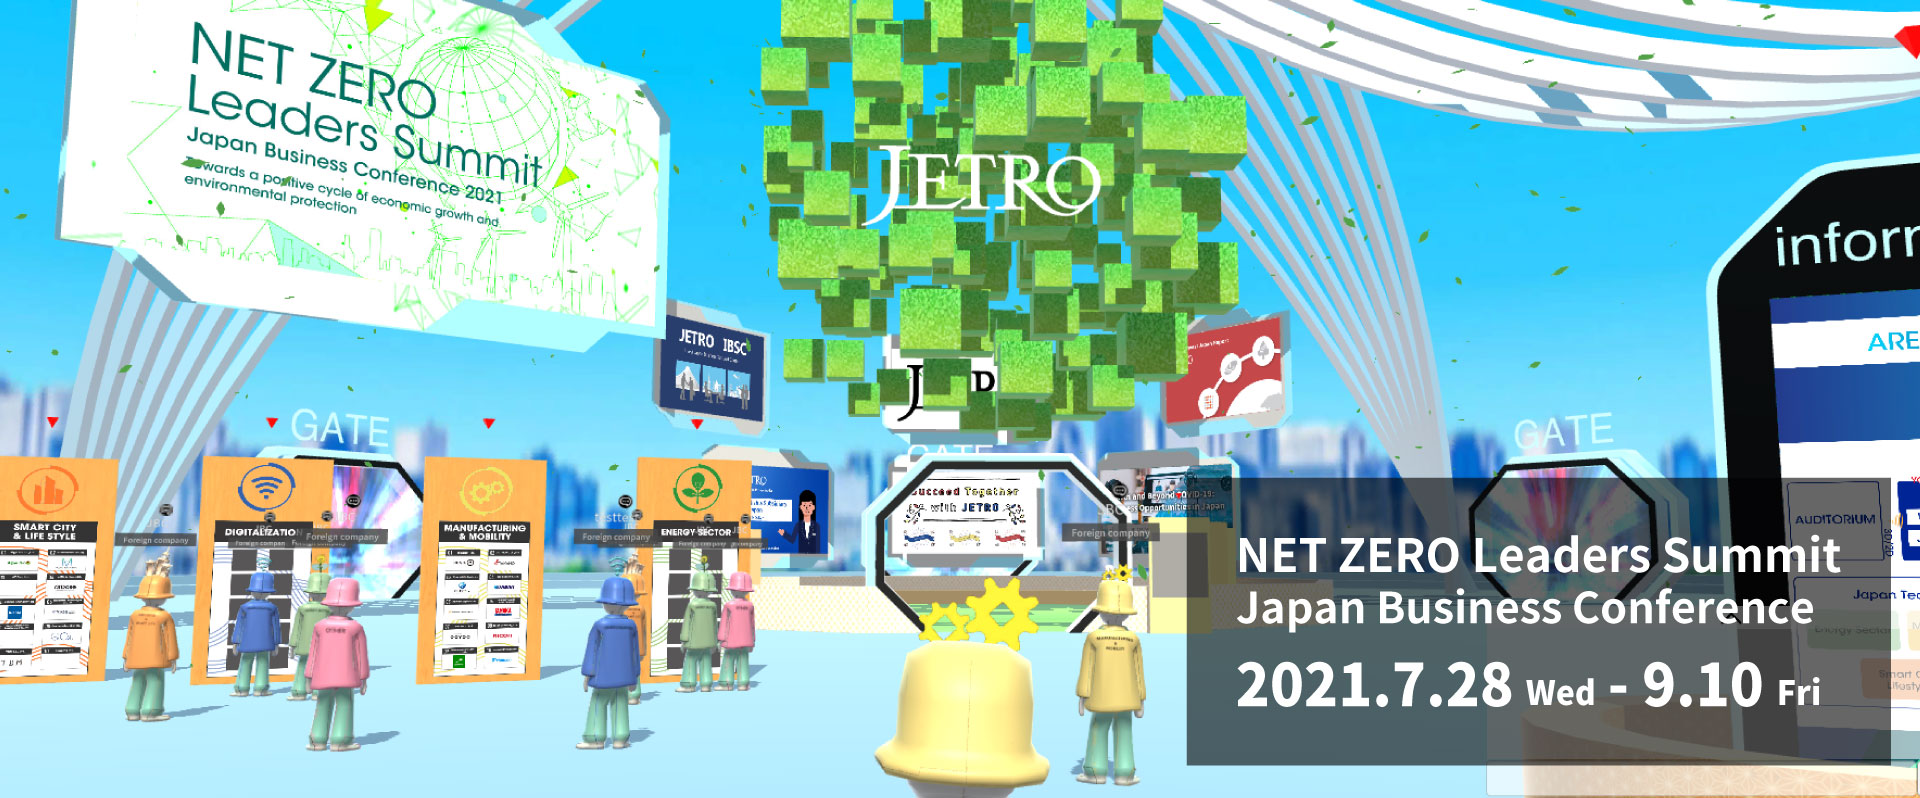 NET ZERO Leaders Summit Japan Business Conference 2021.7.28Wed - 9.10 Fri